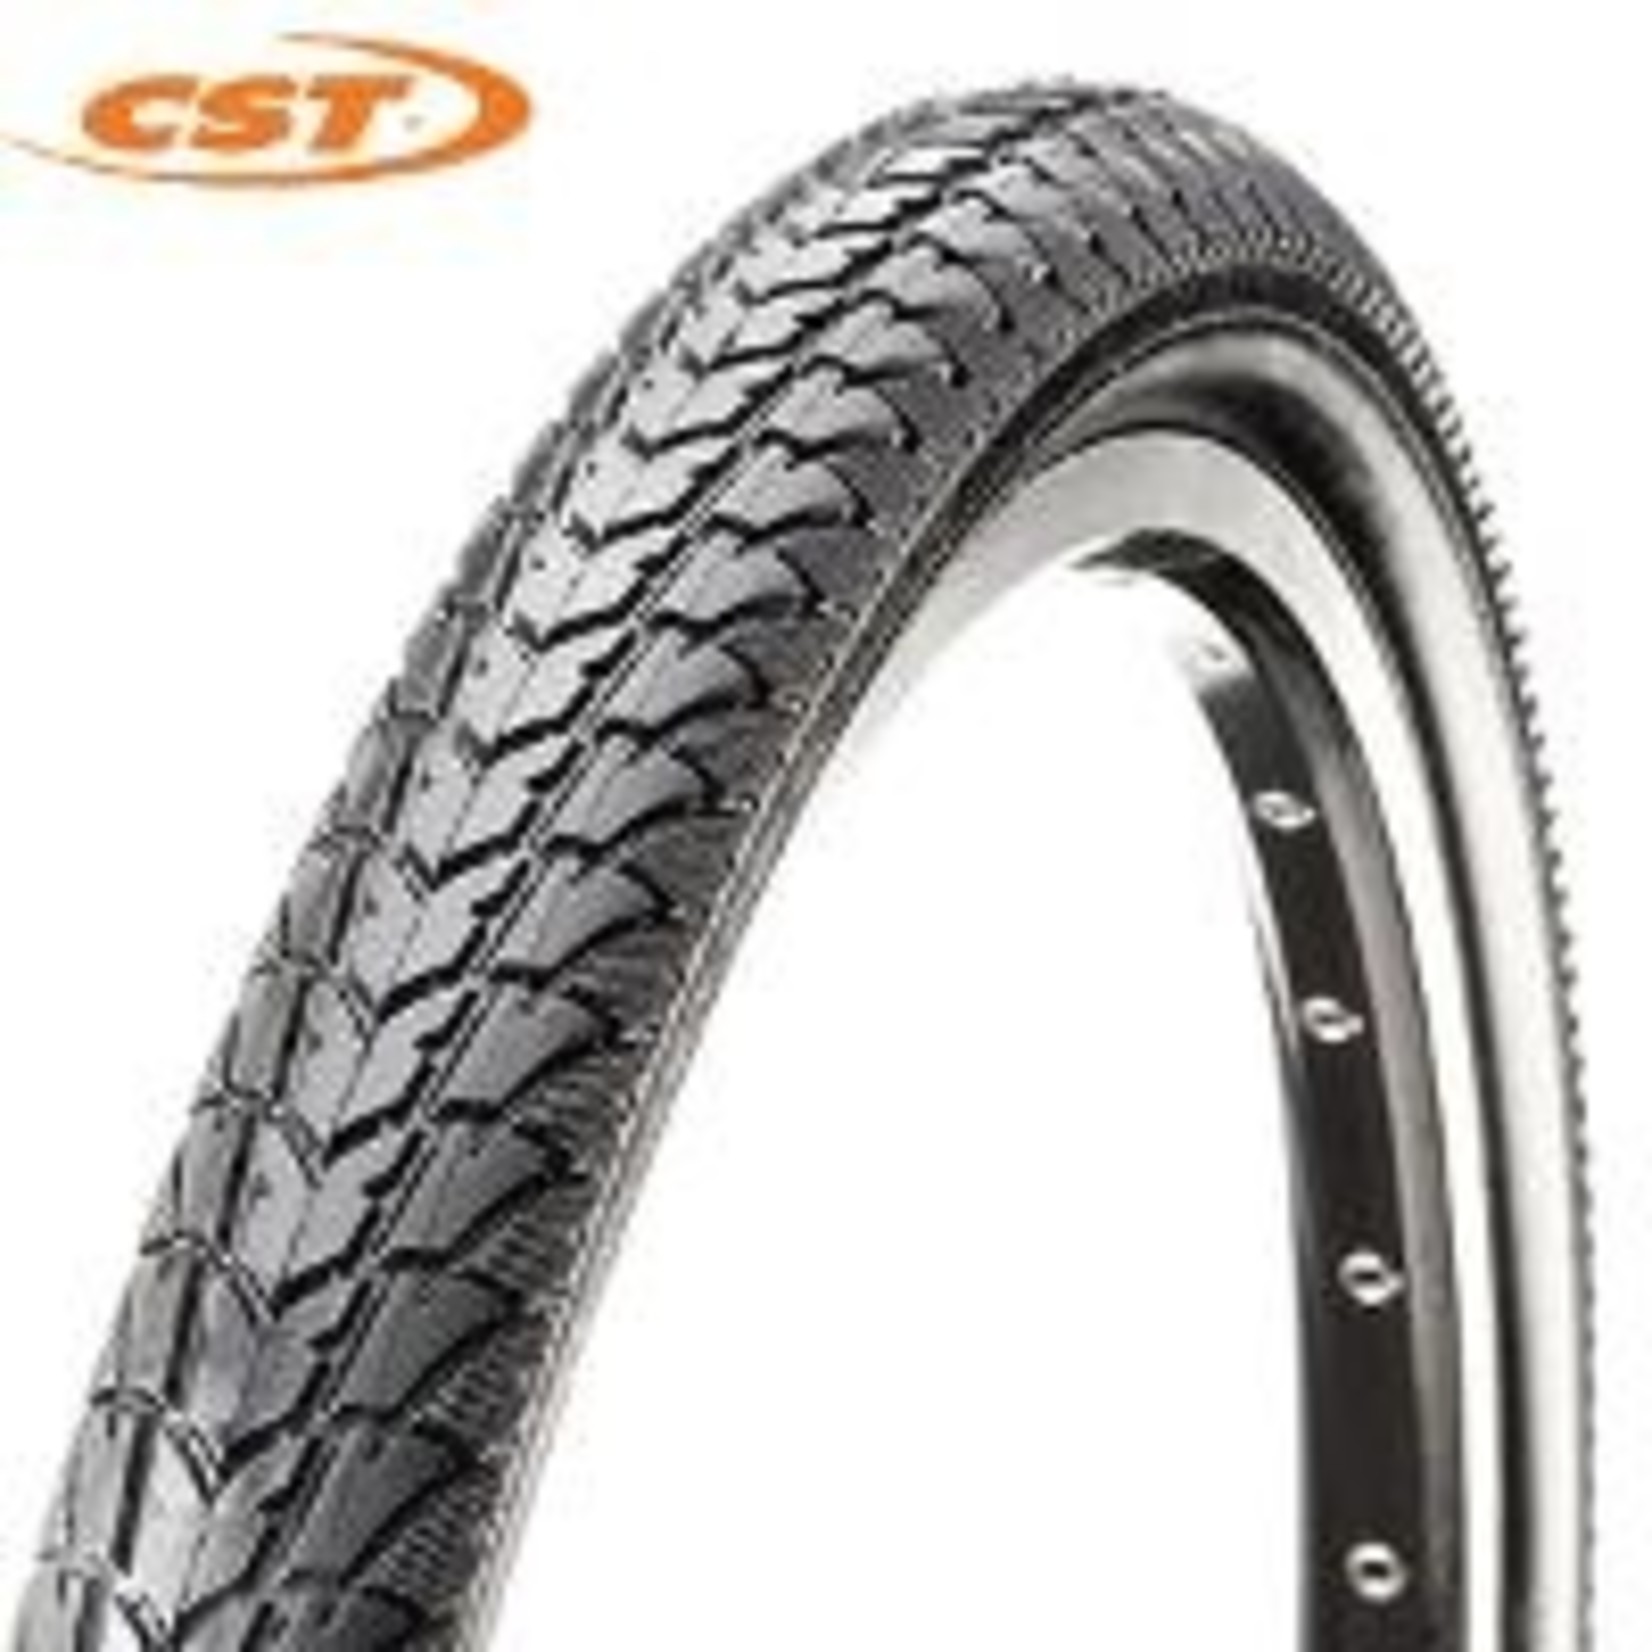 CST CST Bike Tyre - Traveller - 18 X 1.75 - C1446 Wirebead - Pair